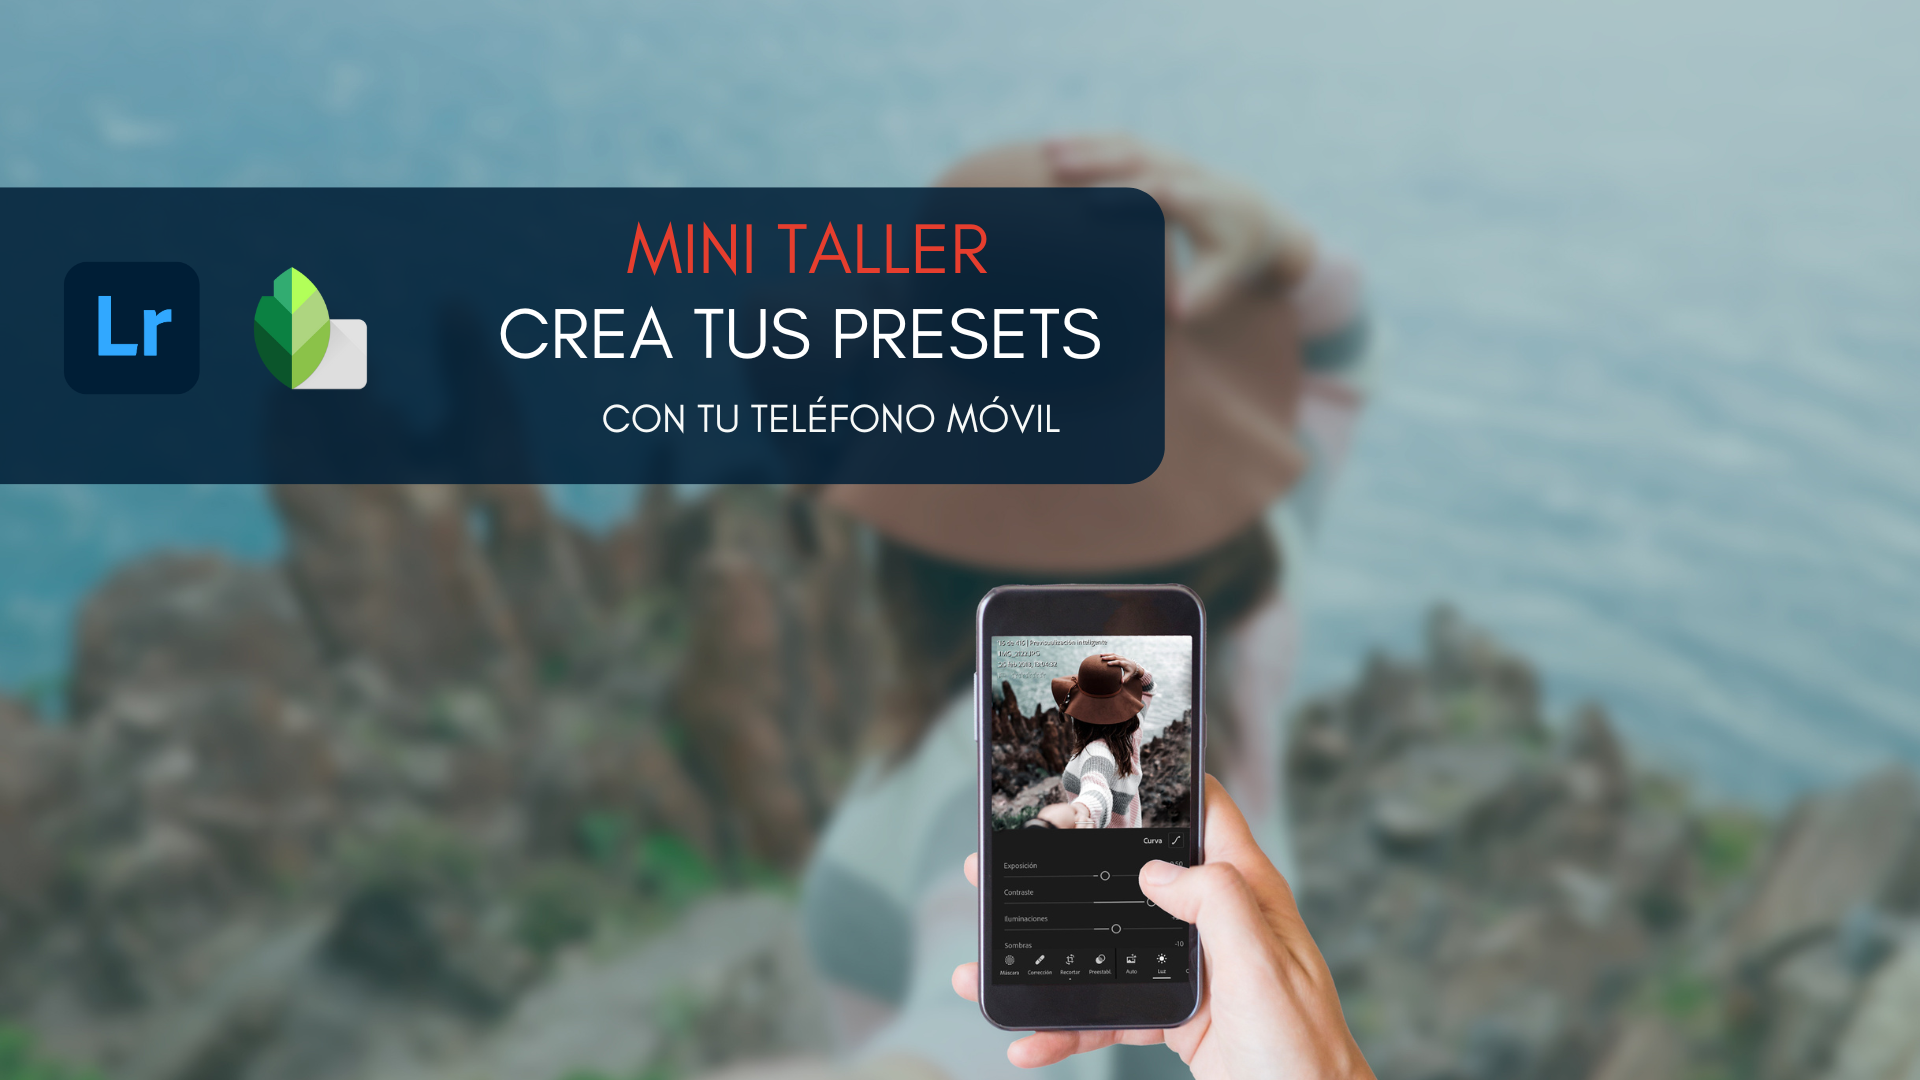 Mini Taller crea tus propios presets